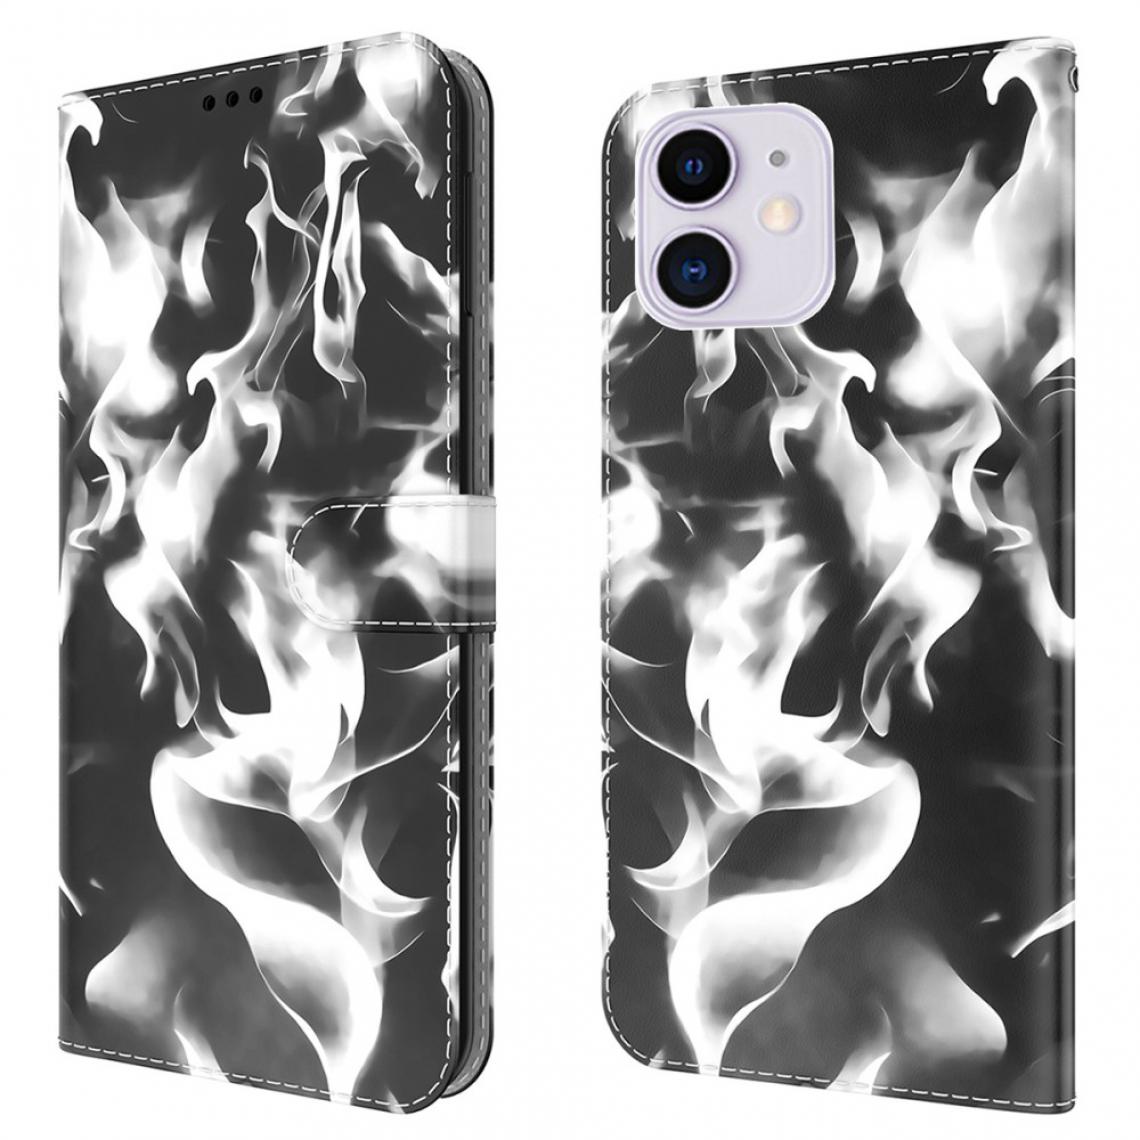 Nillkin - Etui en PU Impression de motifs de brouillard avec support noir pour votre Apple iPhone 12 Mini - Coque, étui smartphone